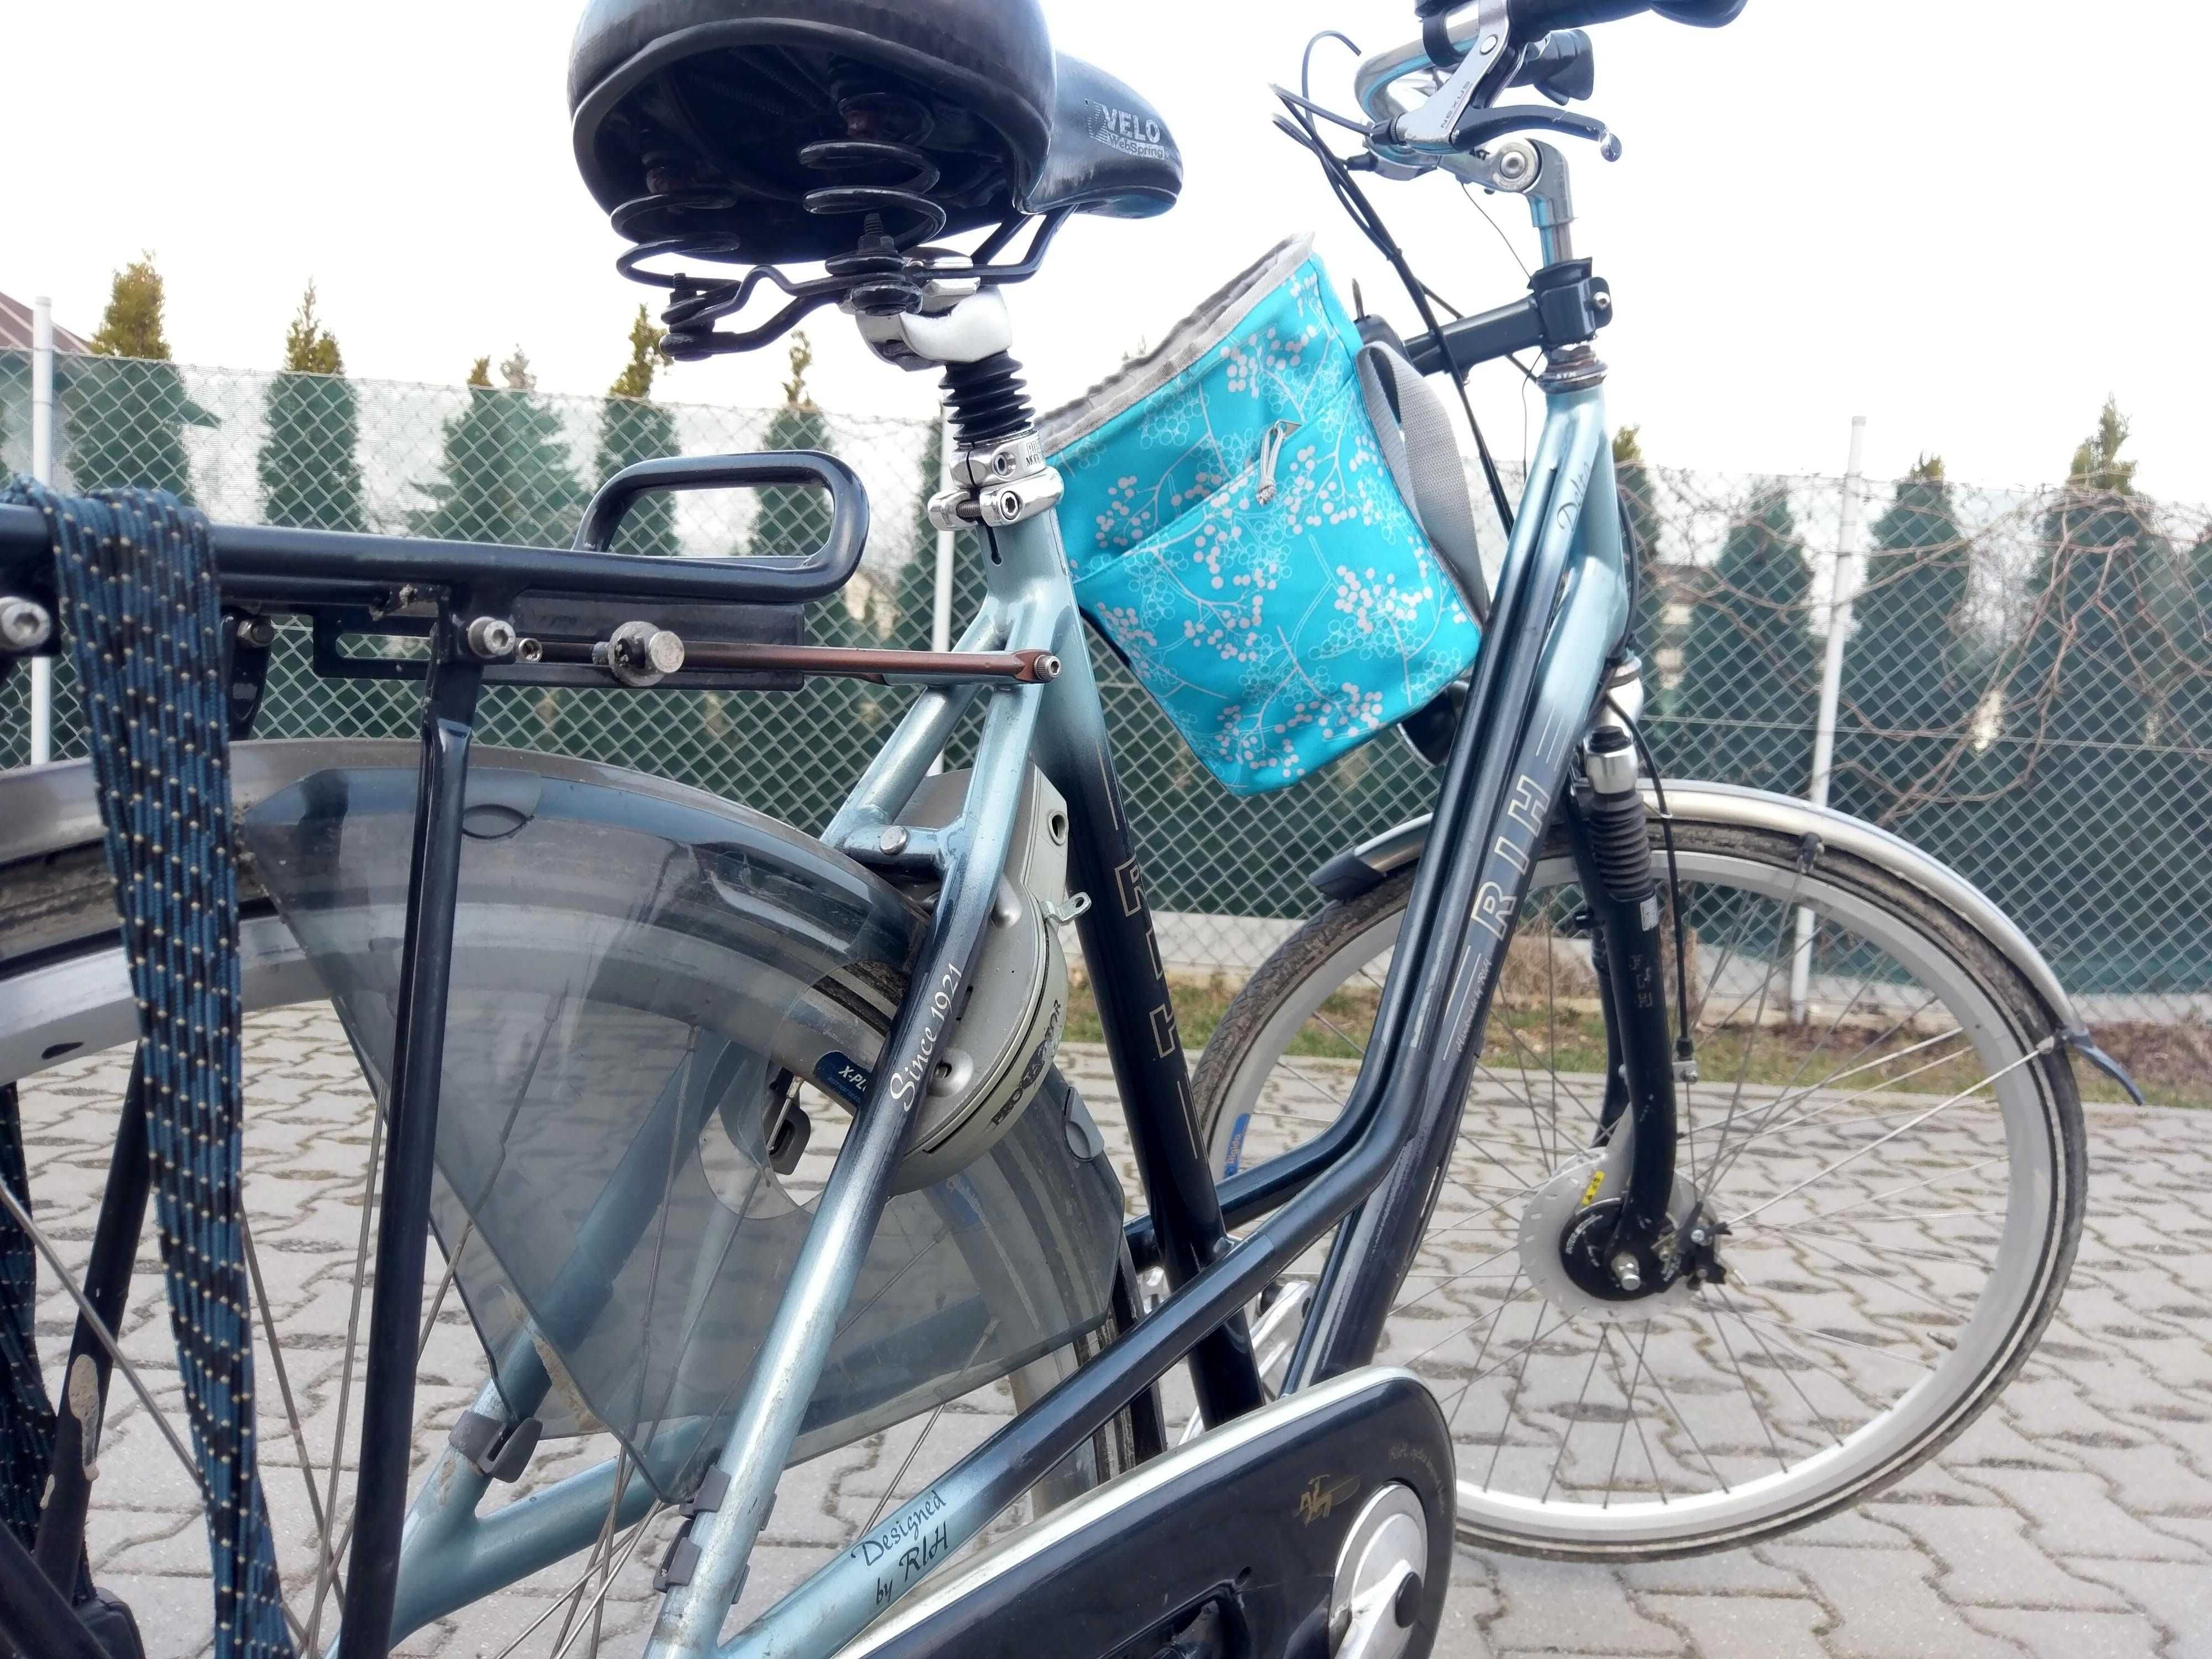 Damski holenderski rower miejski firmy RIH, rozmiar kół 28 cali